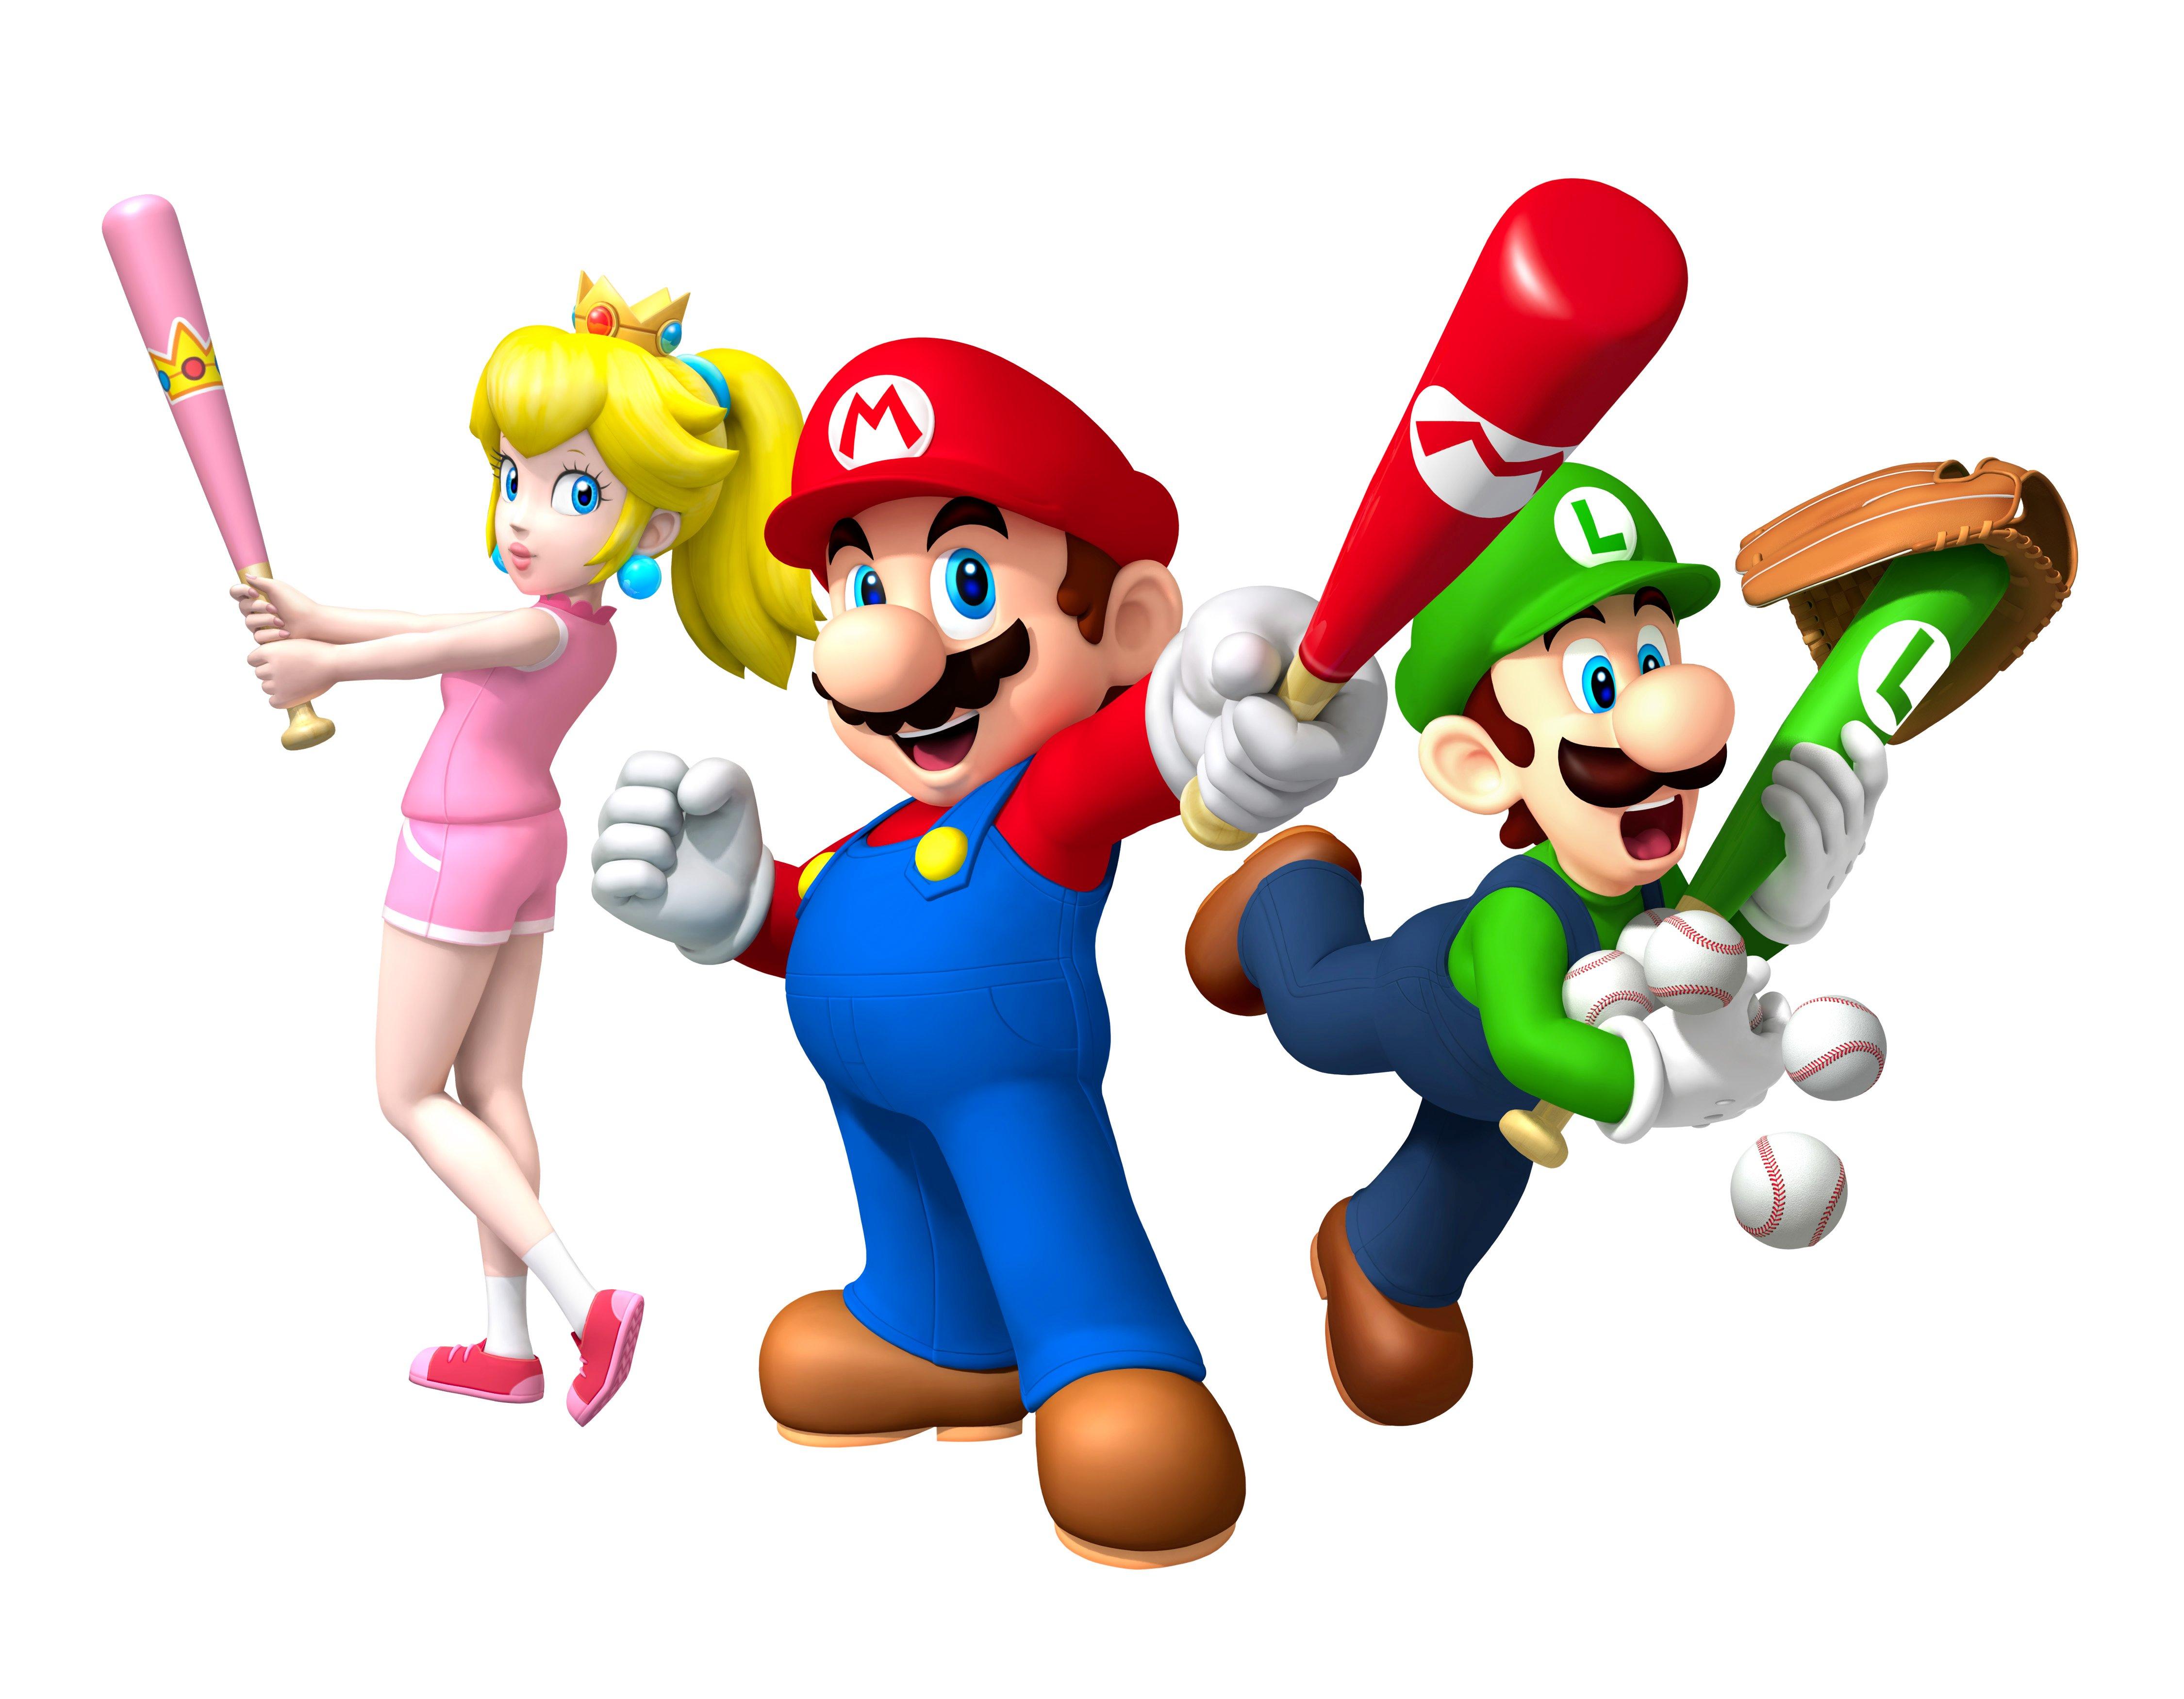 Nintendo Selects: Mario Super Sluggers